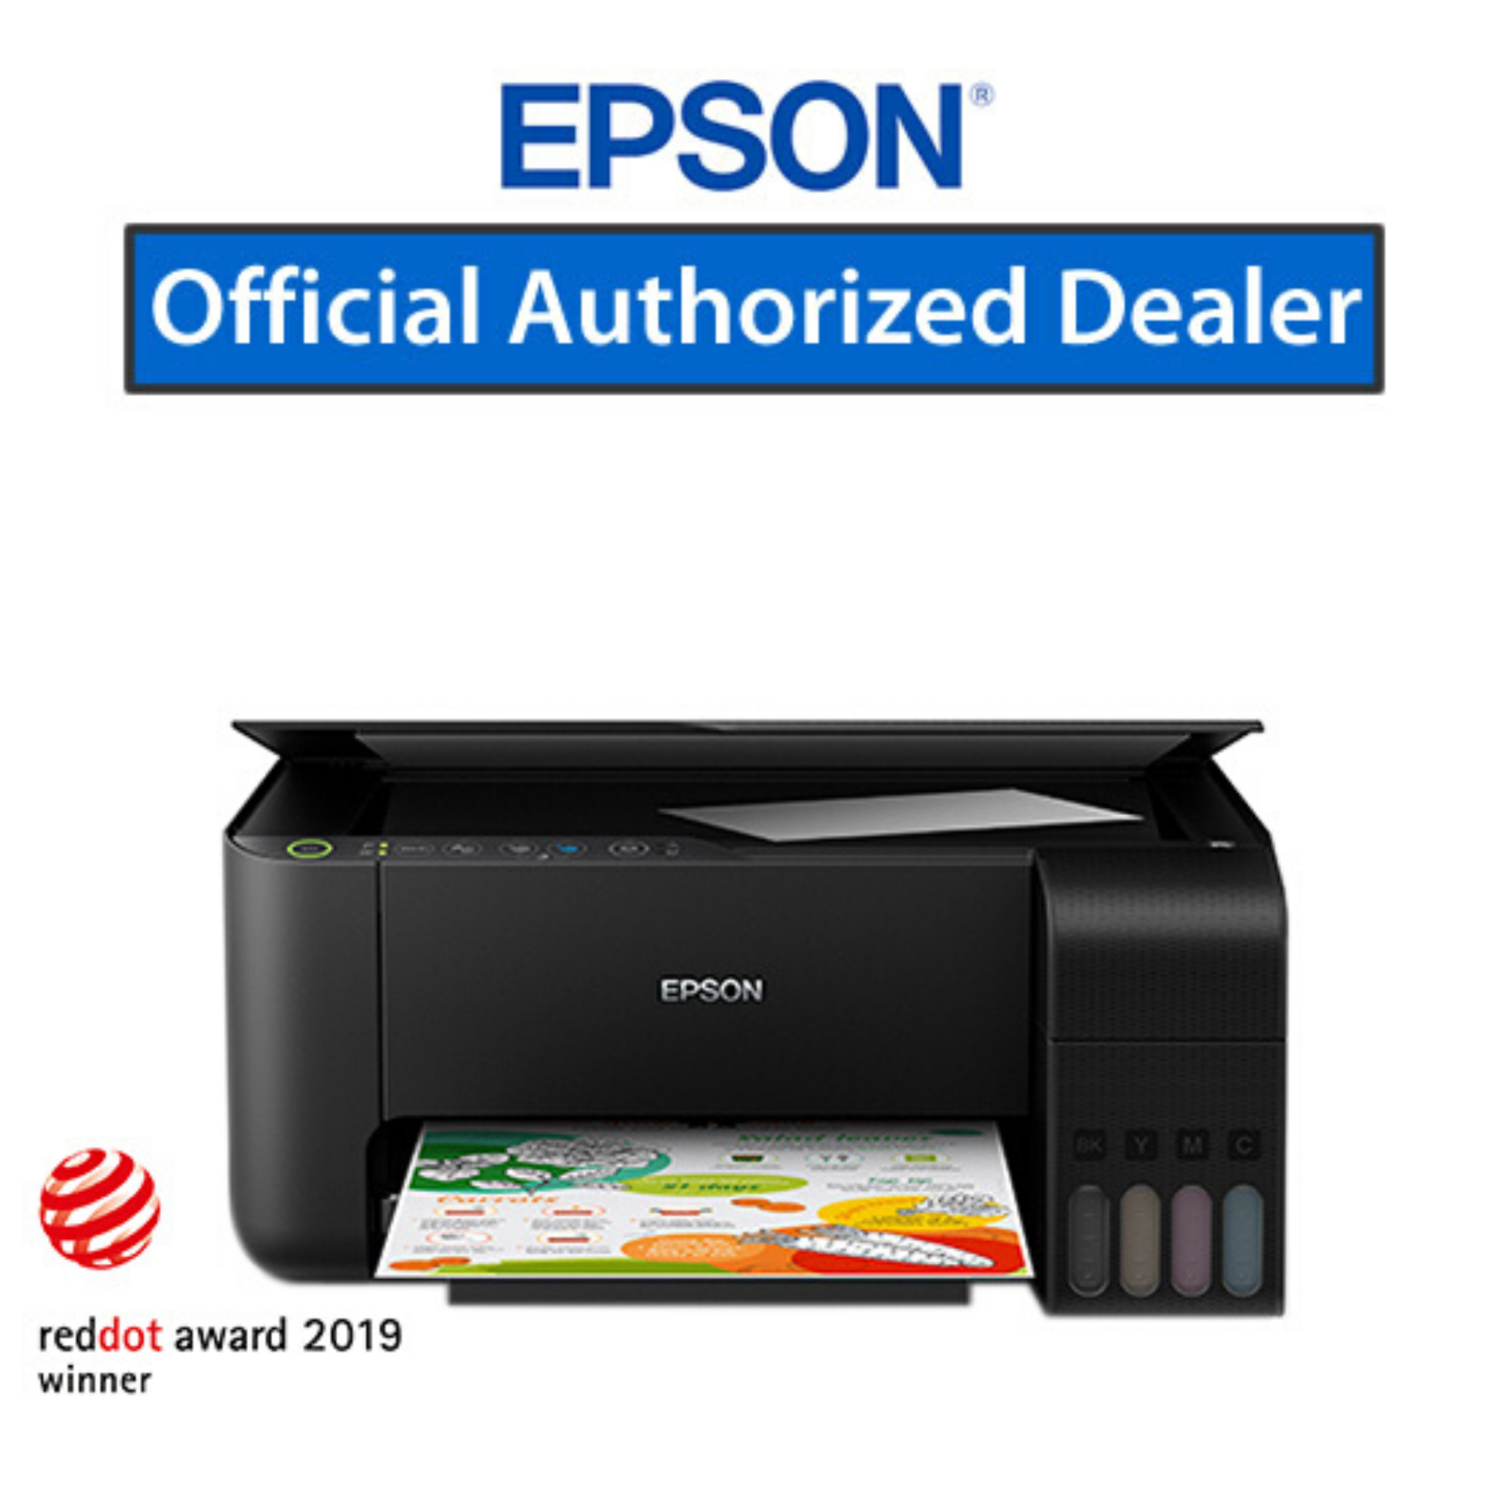 Epson Ecotank L3150 Wi Fi All In One Ink Tank Printer Copierpc